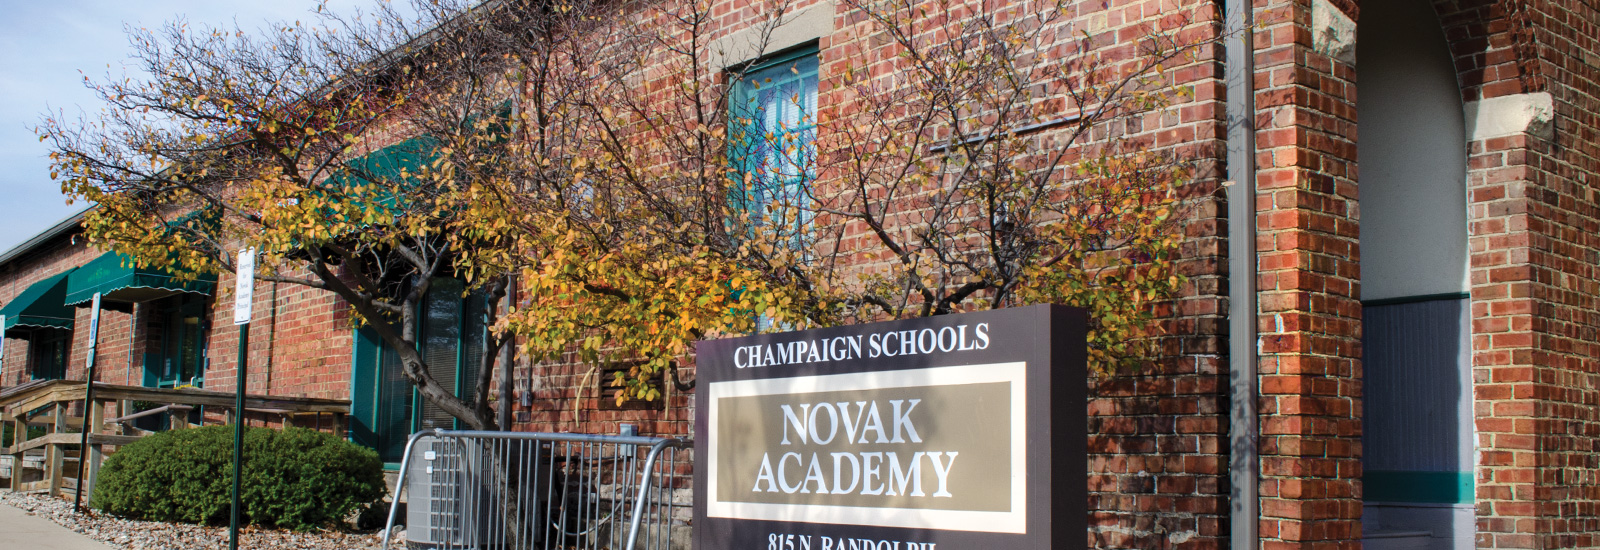 novak academy